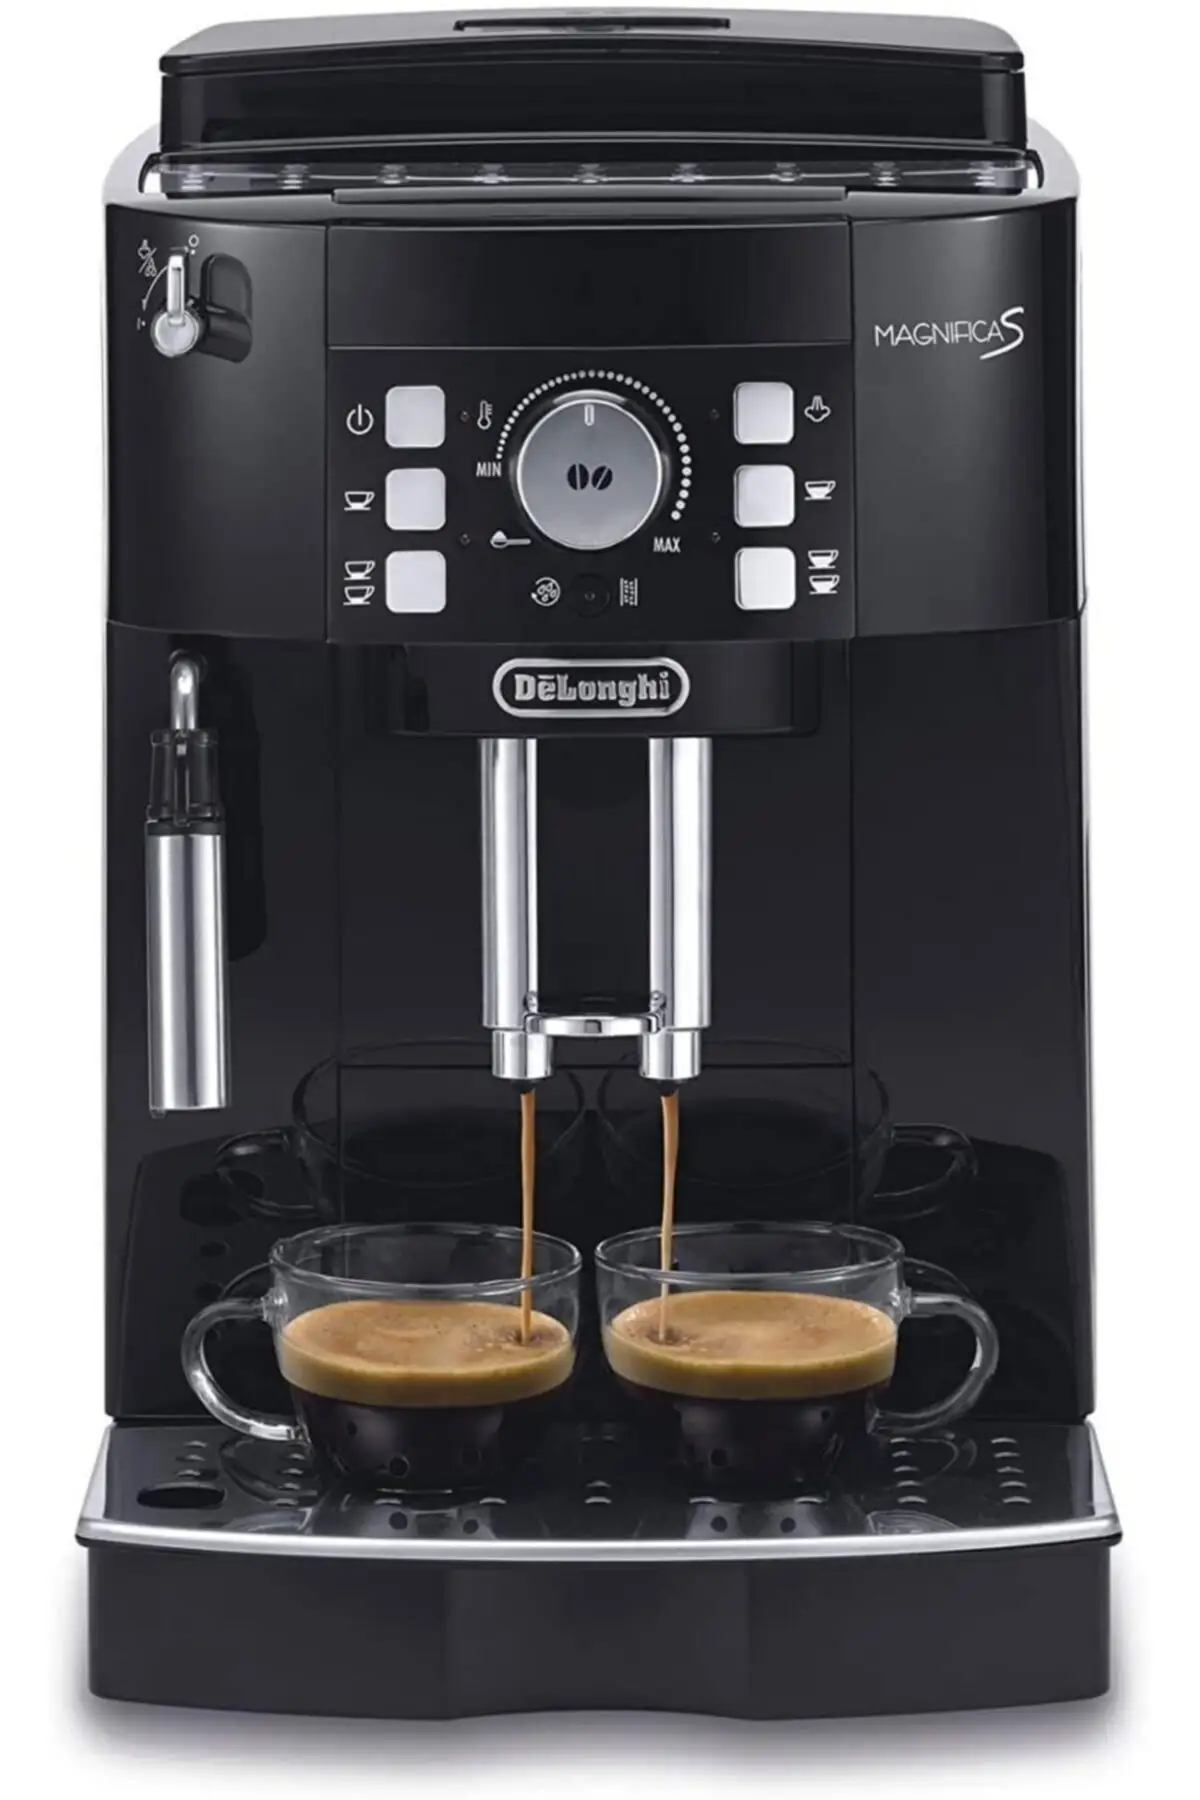 

Delonghi Magnifica The S Ecam21.117.b Fully Automatic Coffee Machine